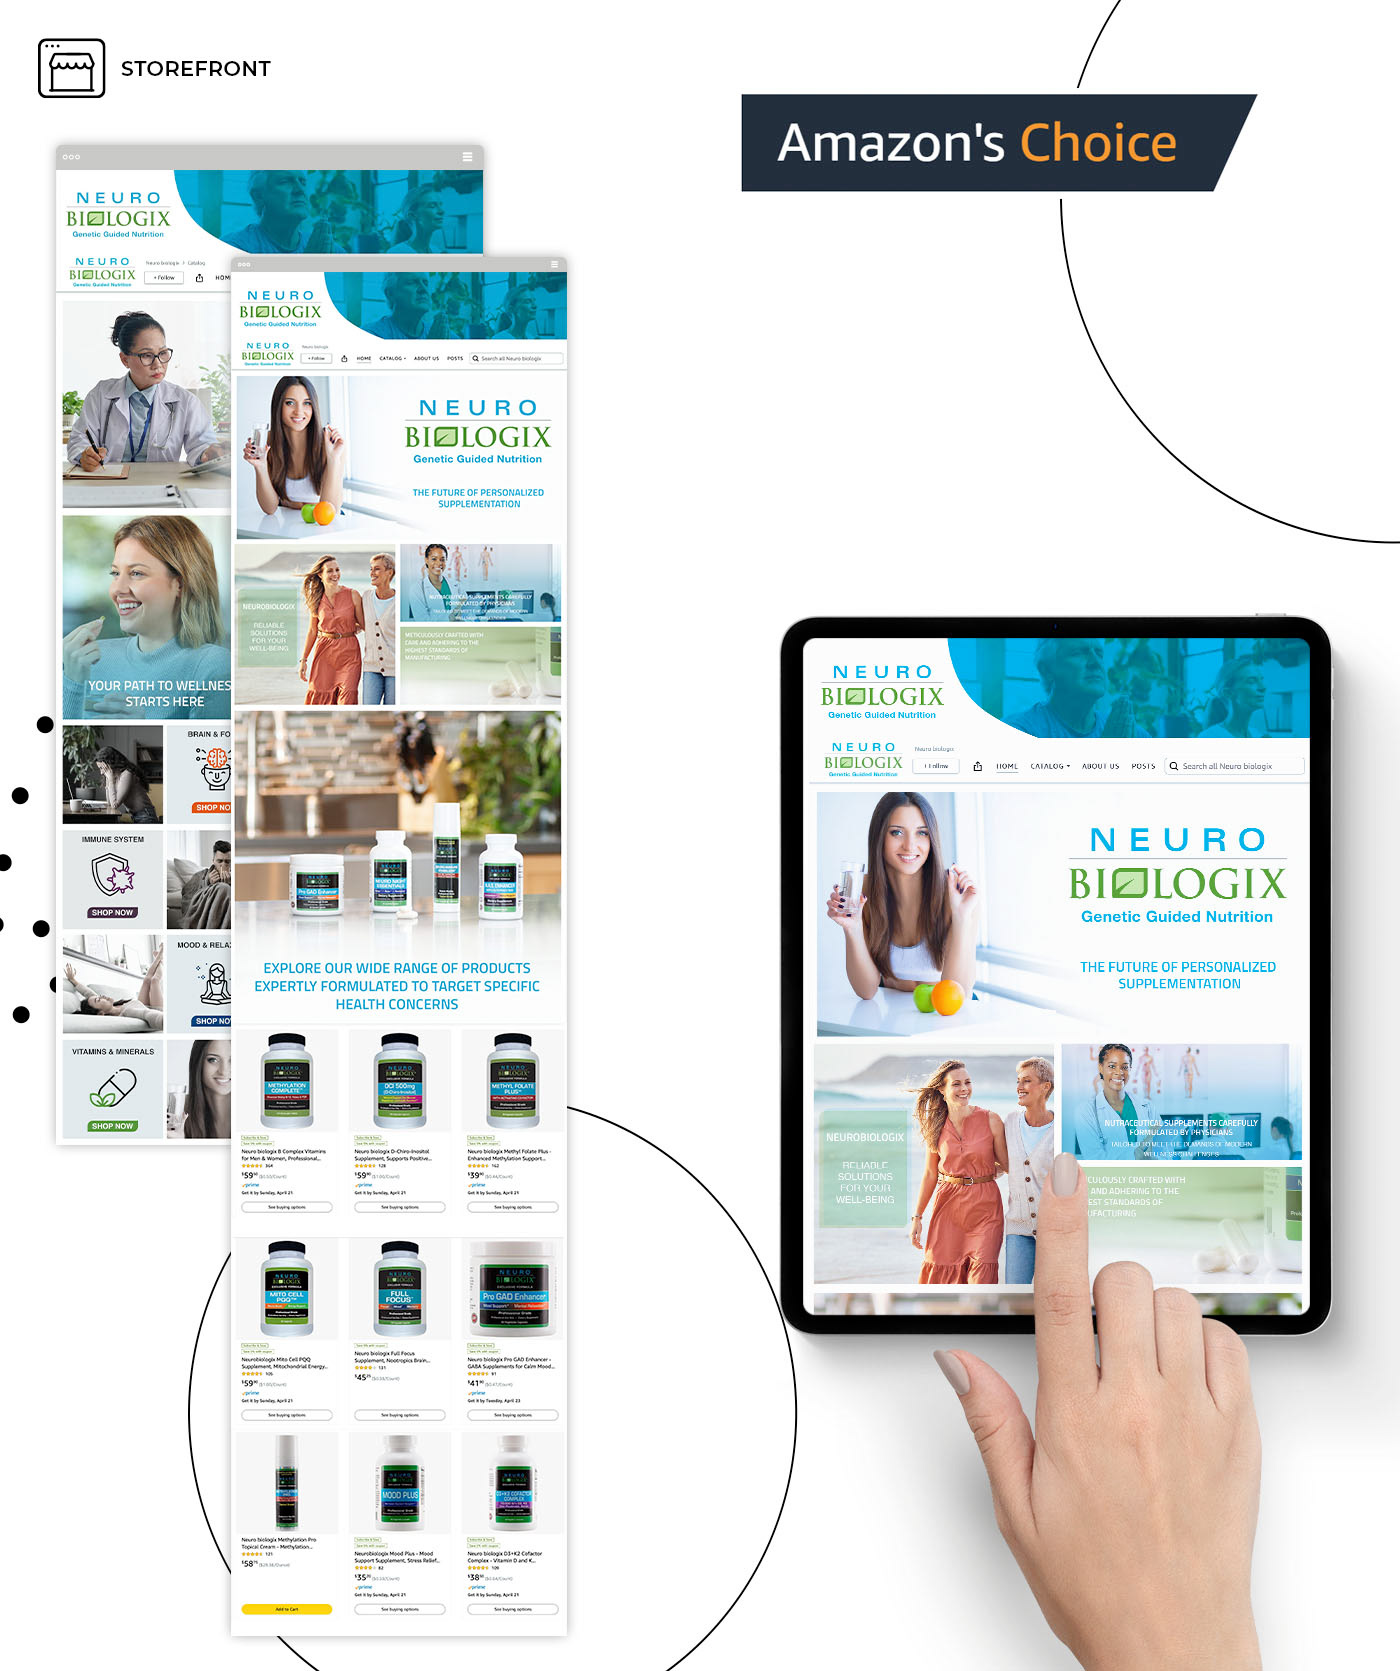 Amazon Amazon Listing Amazon Product amazon ebc enhanced brand content amazon A+ EBC Design infographic graphic design 